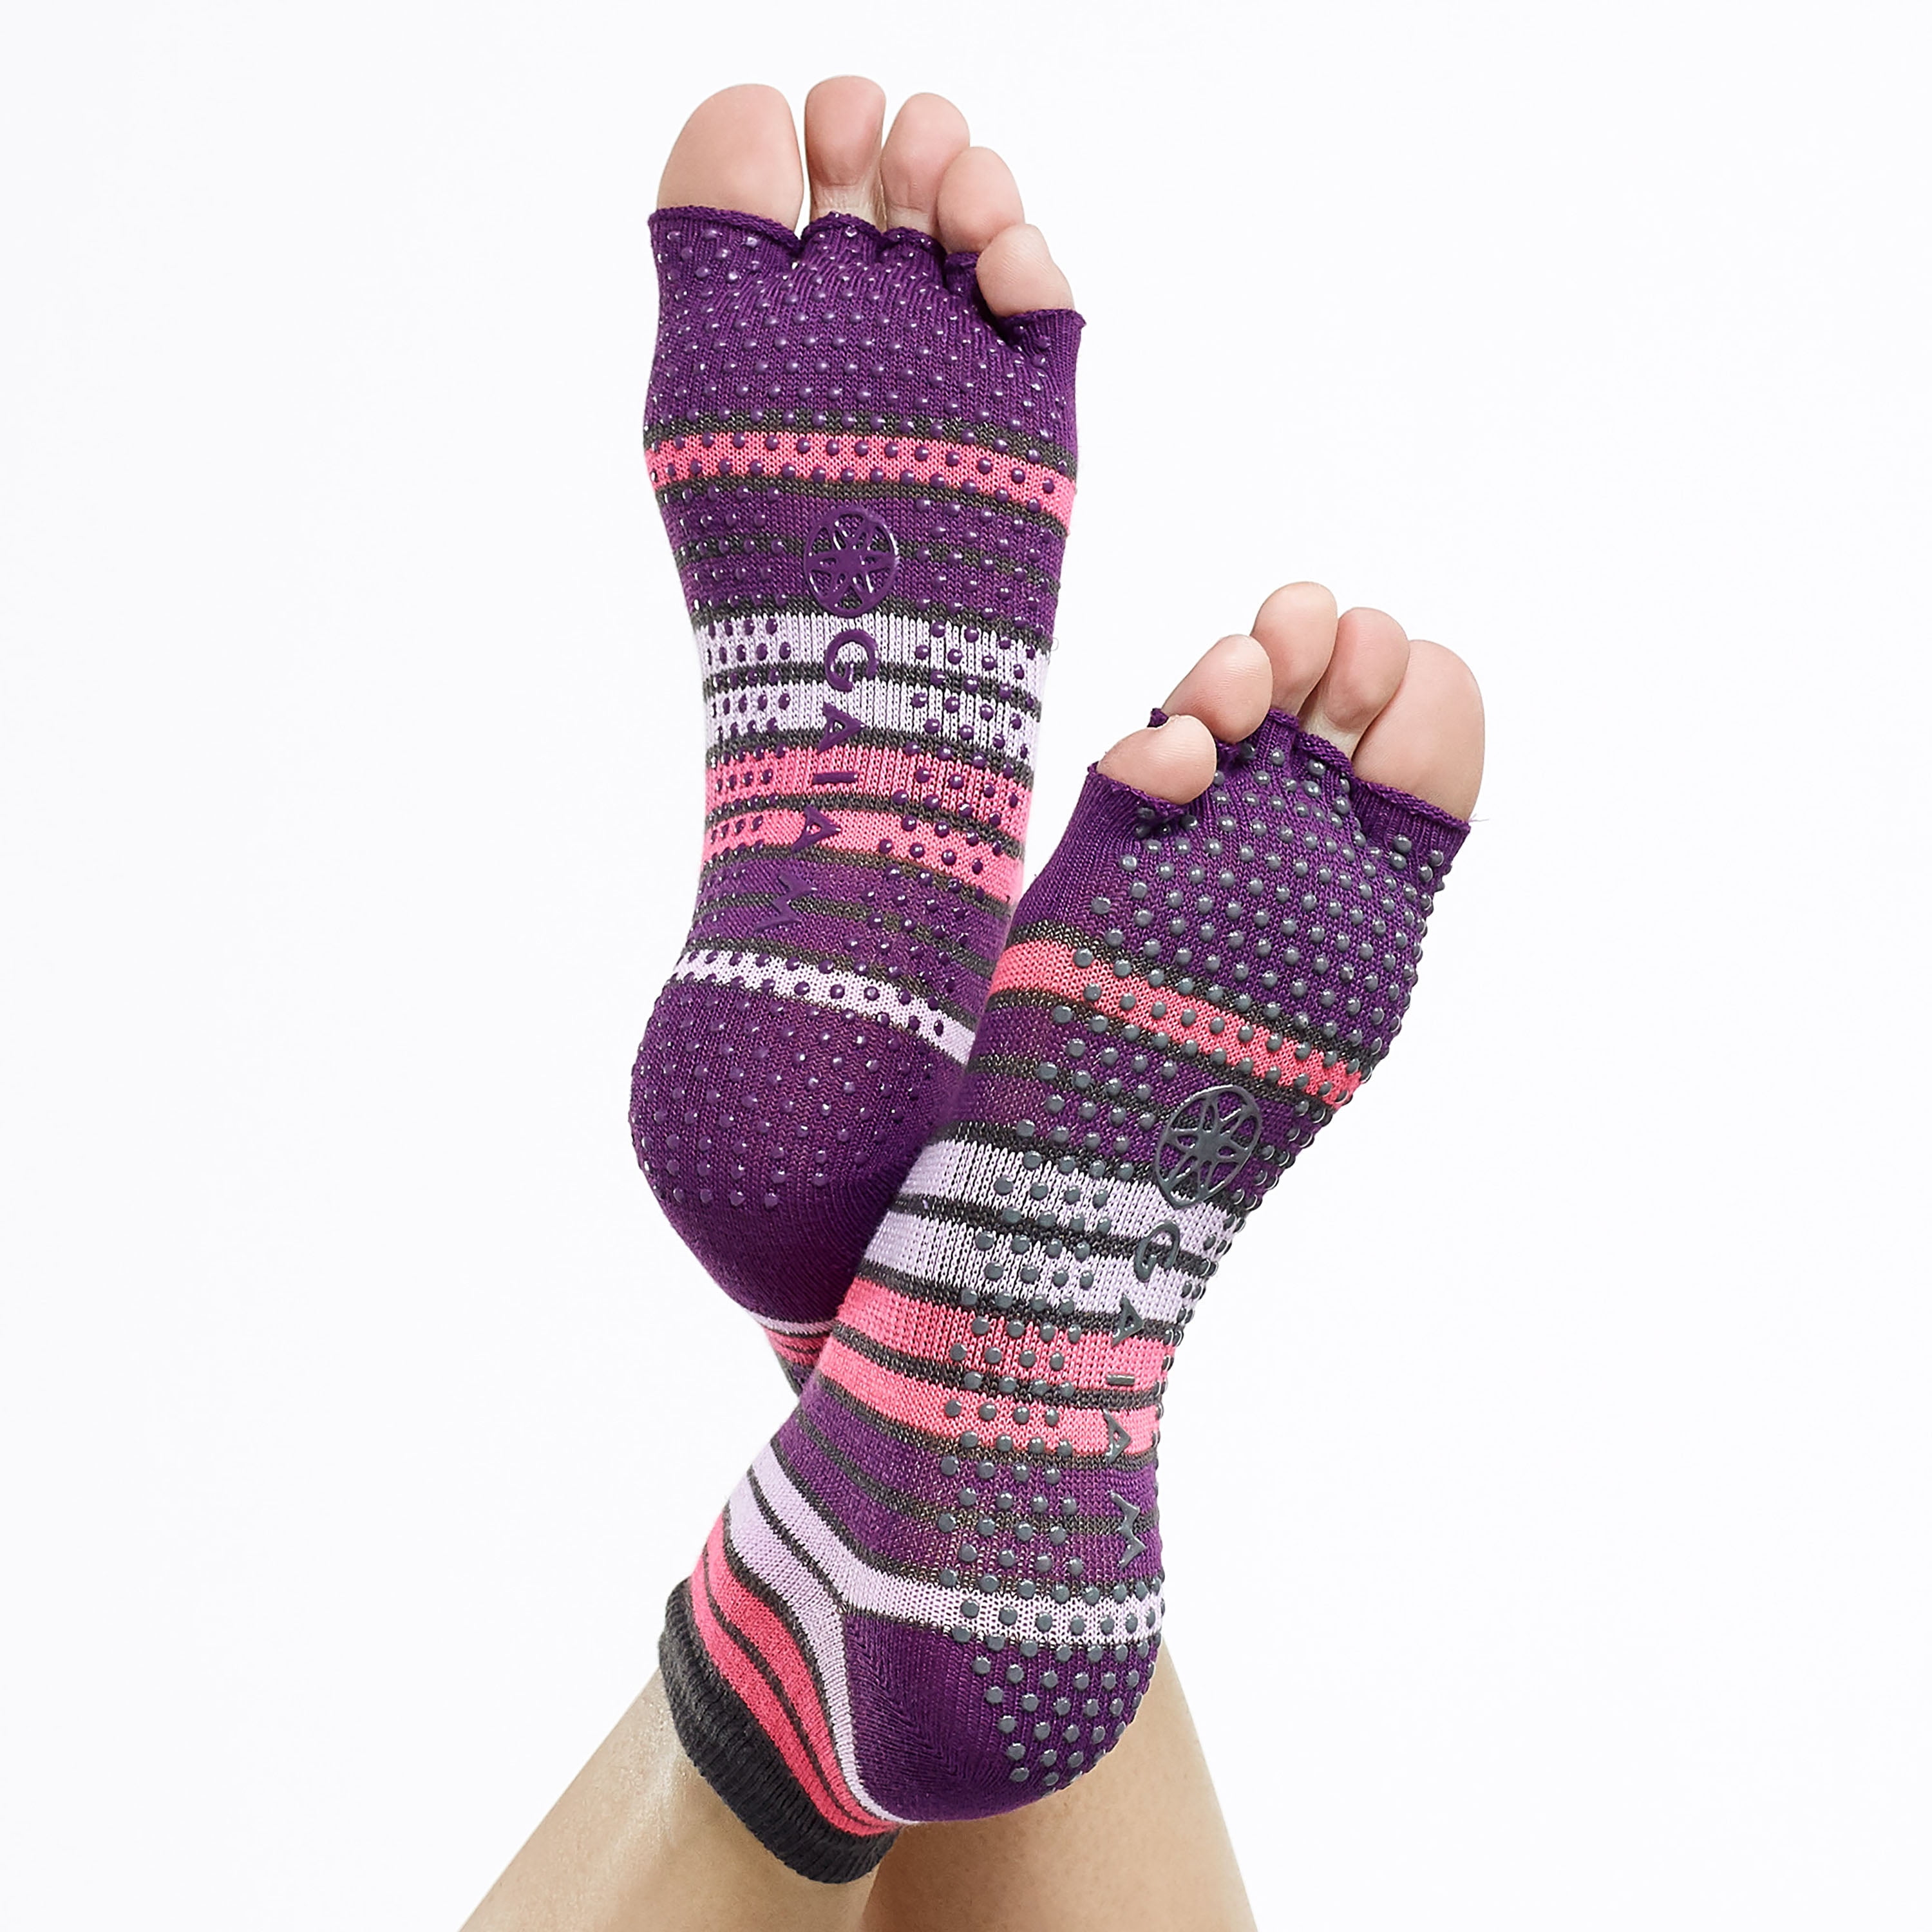 Gaiam Yoga Socks Toe SUPER Grippy Pink Yellow Purple New Shoe size 5-10 B9